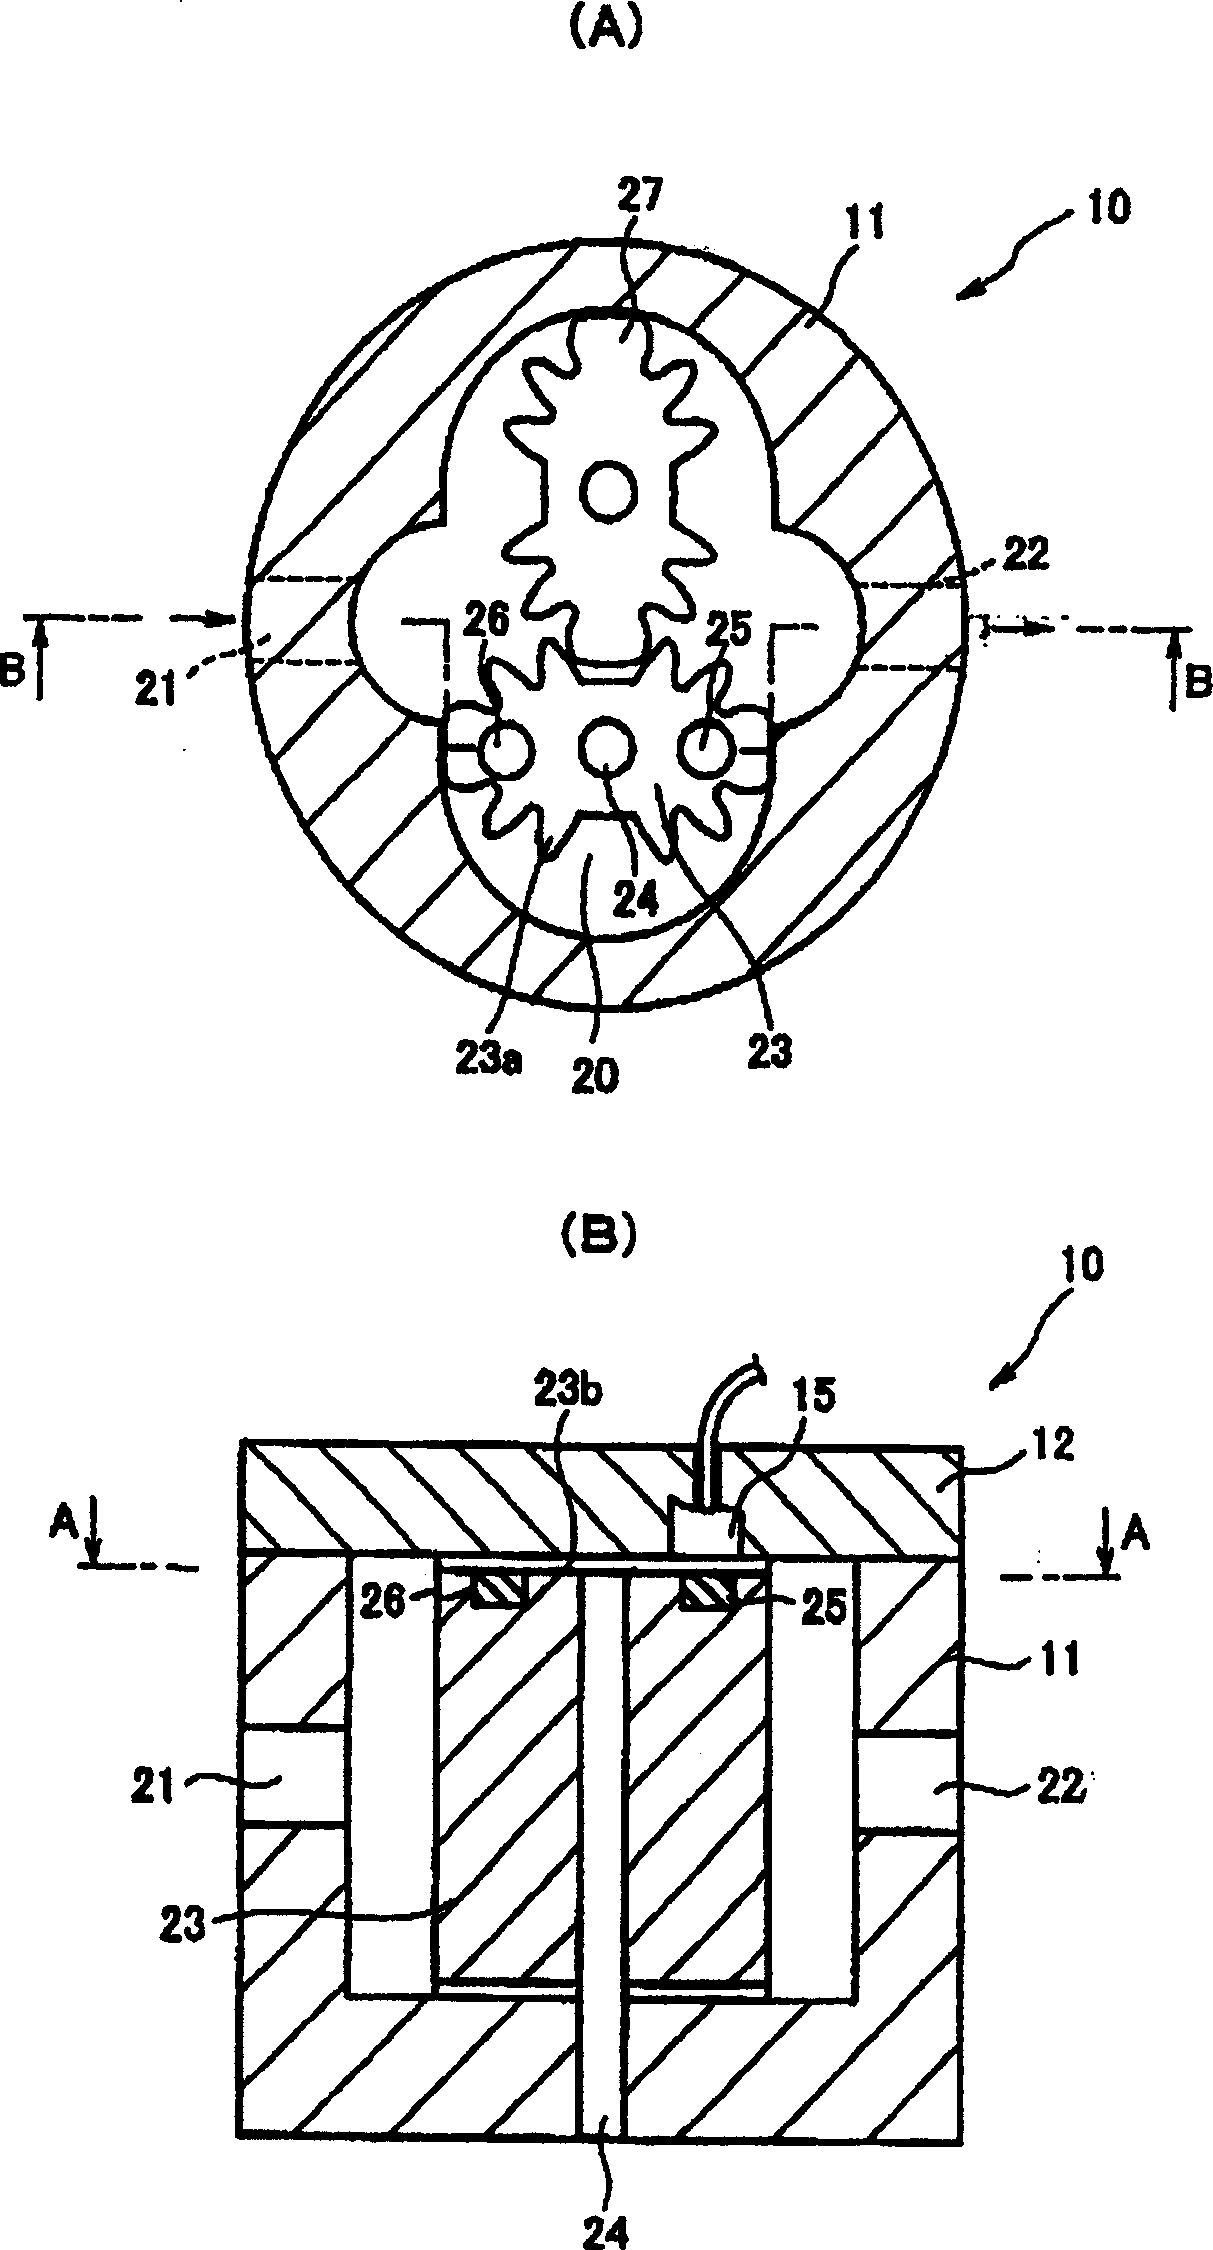 Non round gear and volumetric flowmeter using same